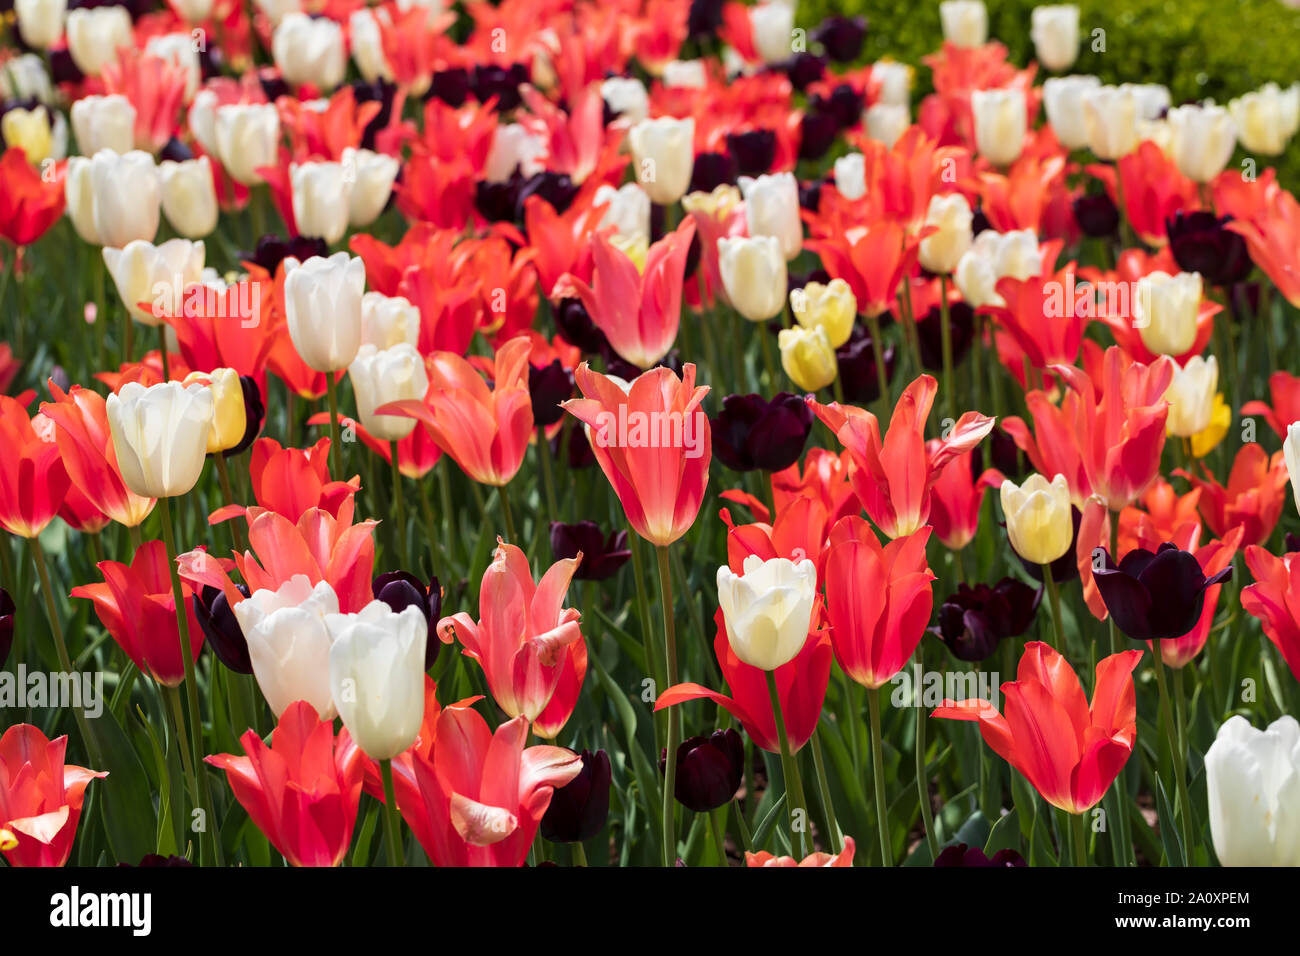 Display of tulips at Atlanta Botanical Garden in spring Stock Photo